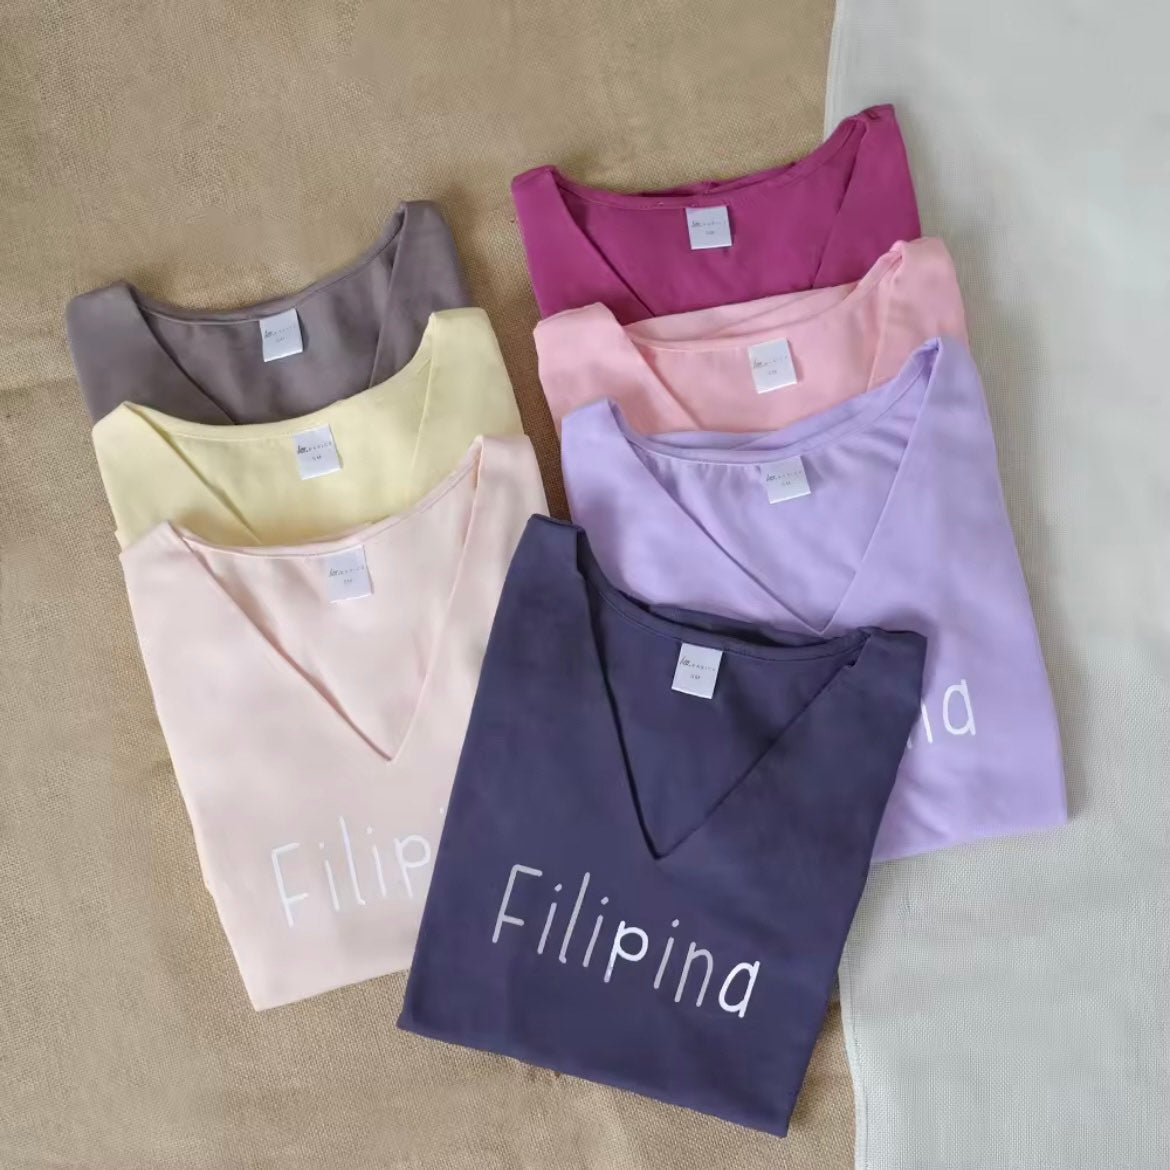 HTP Sale Filipina Tshirt for Women